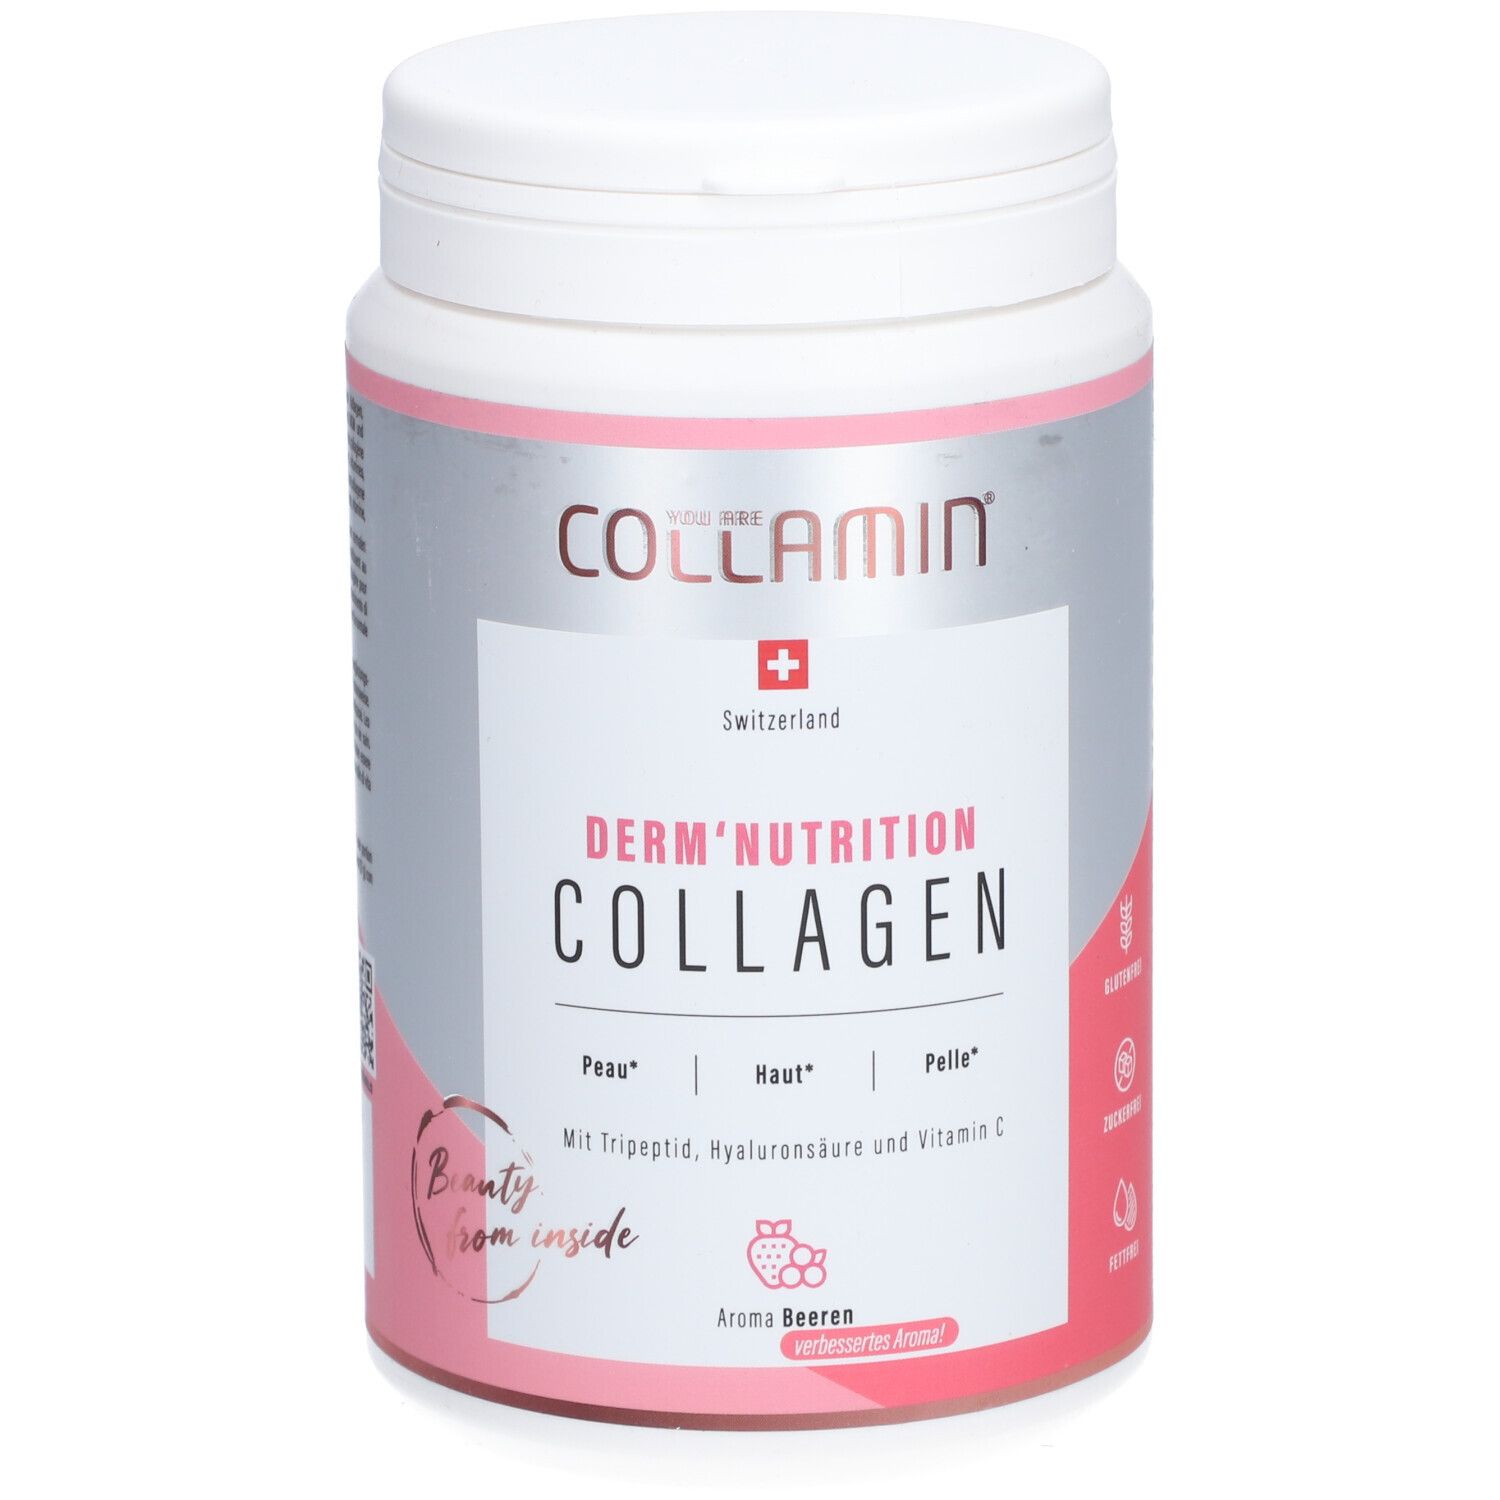 COLLAMIN® Derm' Nutrition Kollagen